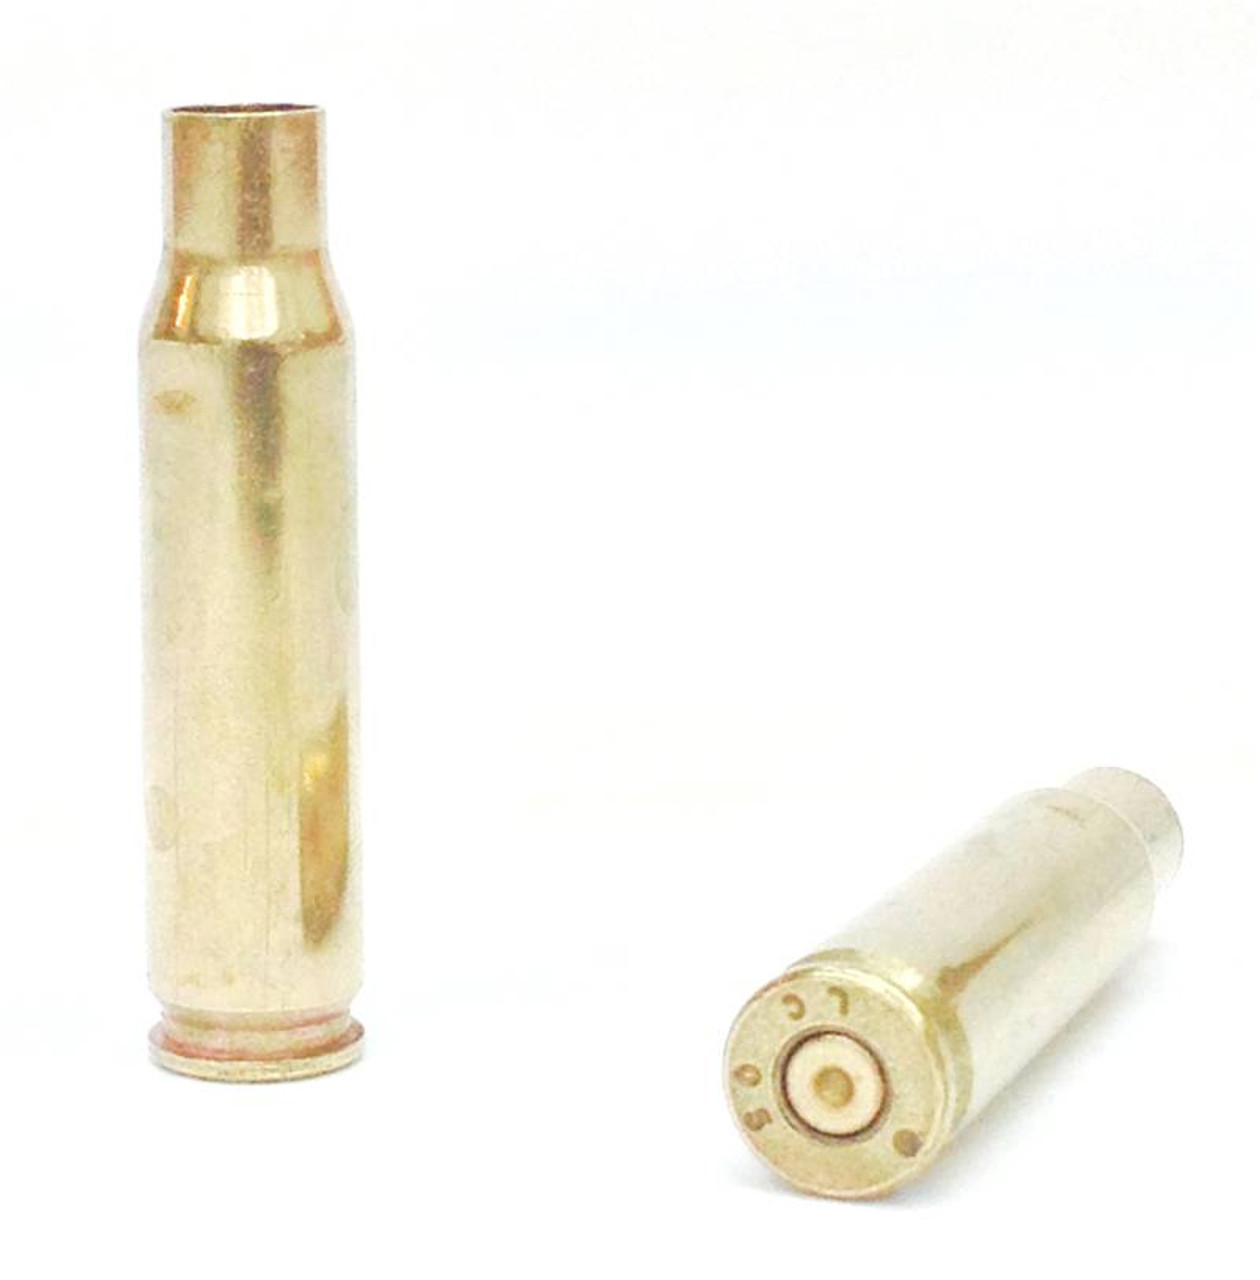 Cases for reloading ammunition